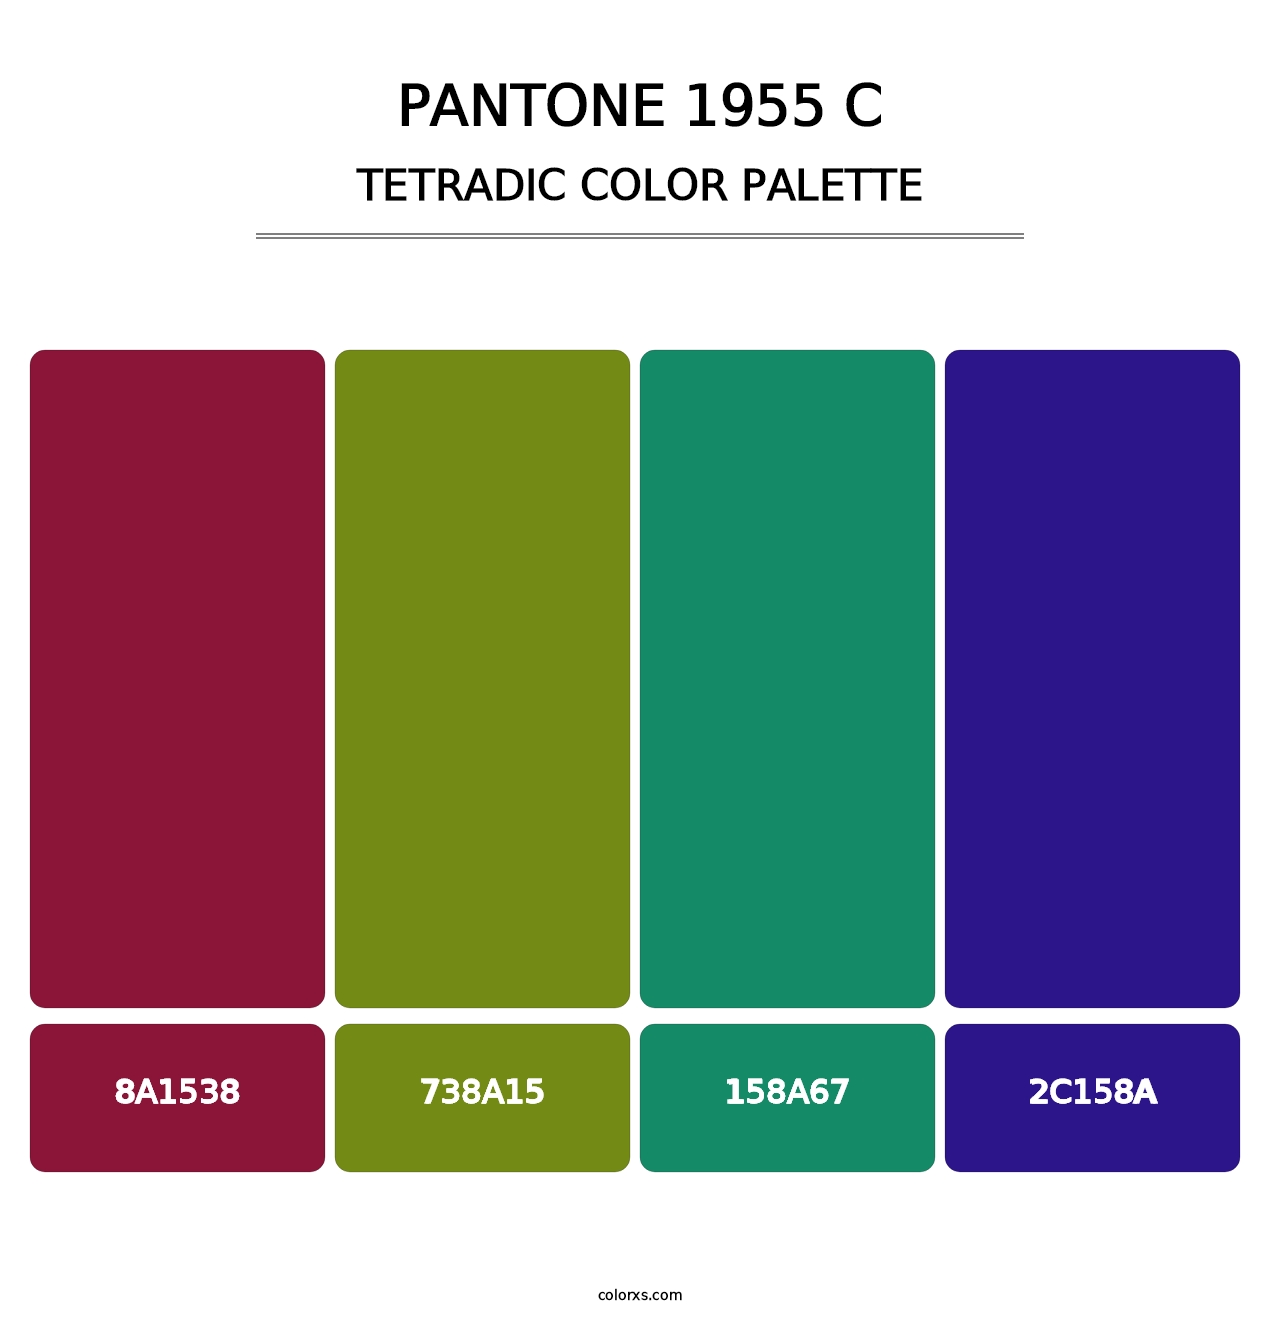 PANTONE 1955 C - Tetradic Color Palette